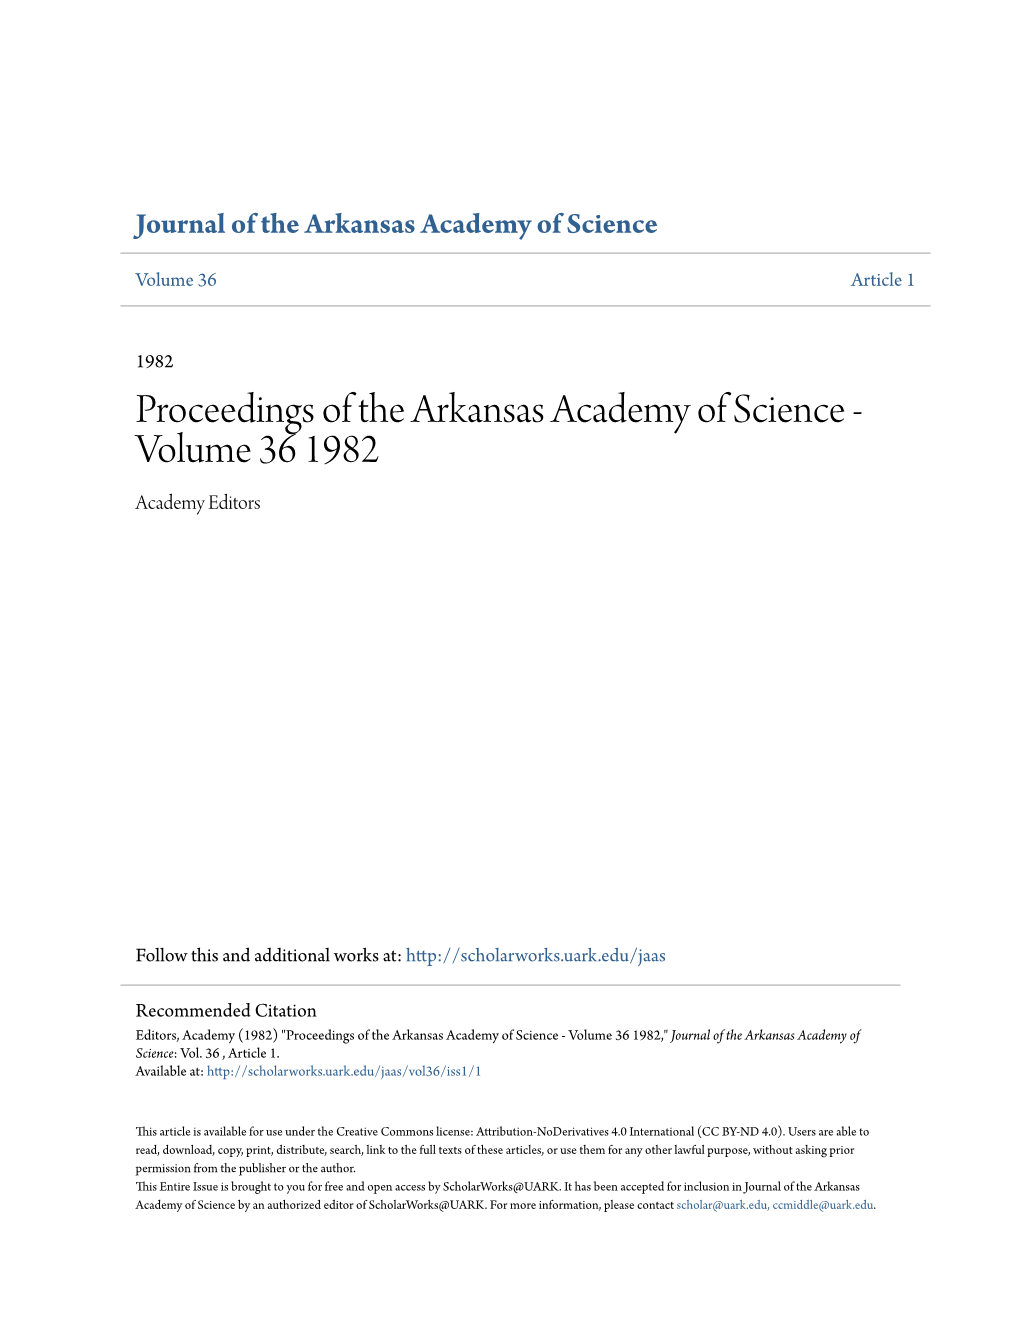 Proceedings of the Arkansas Academy of Science - Volume 36 1982 Academy Editors